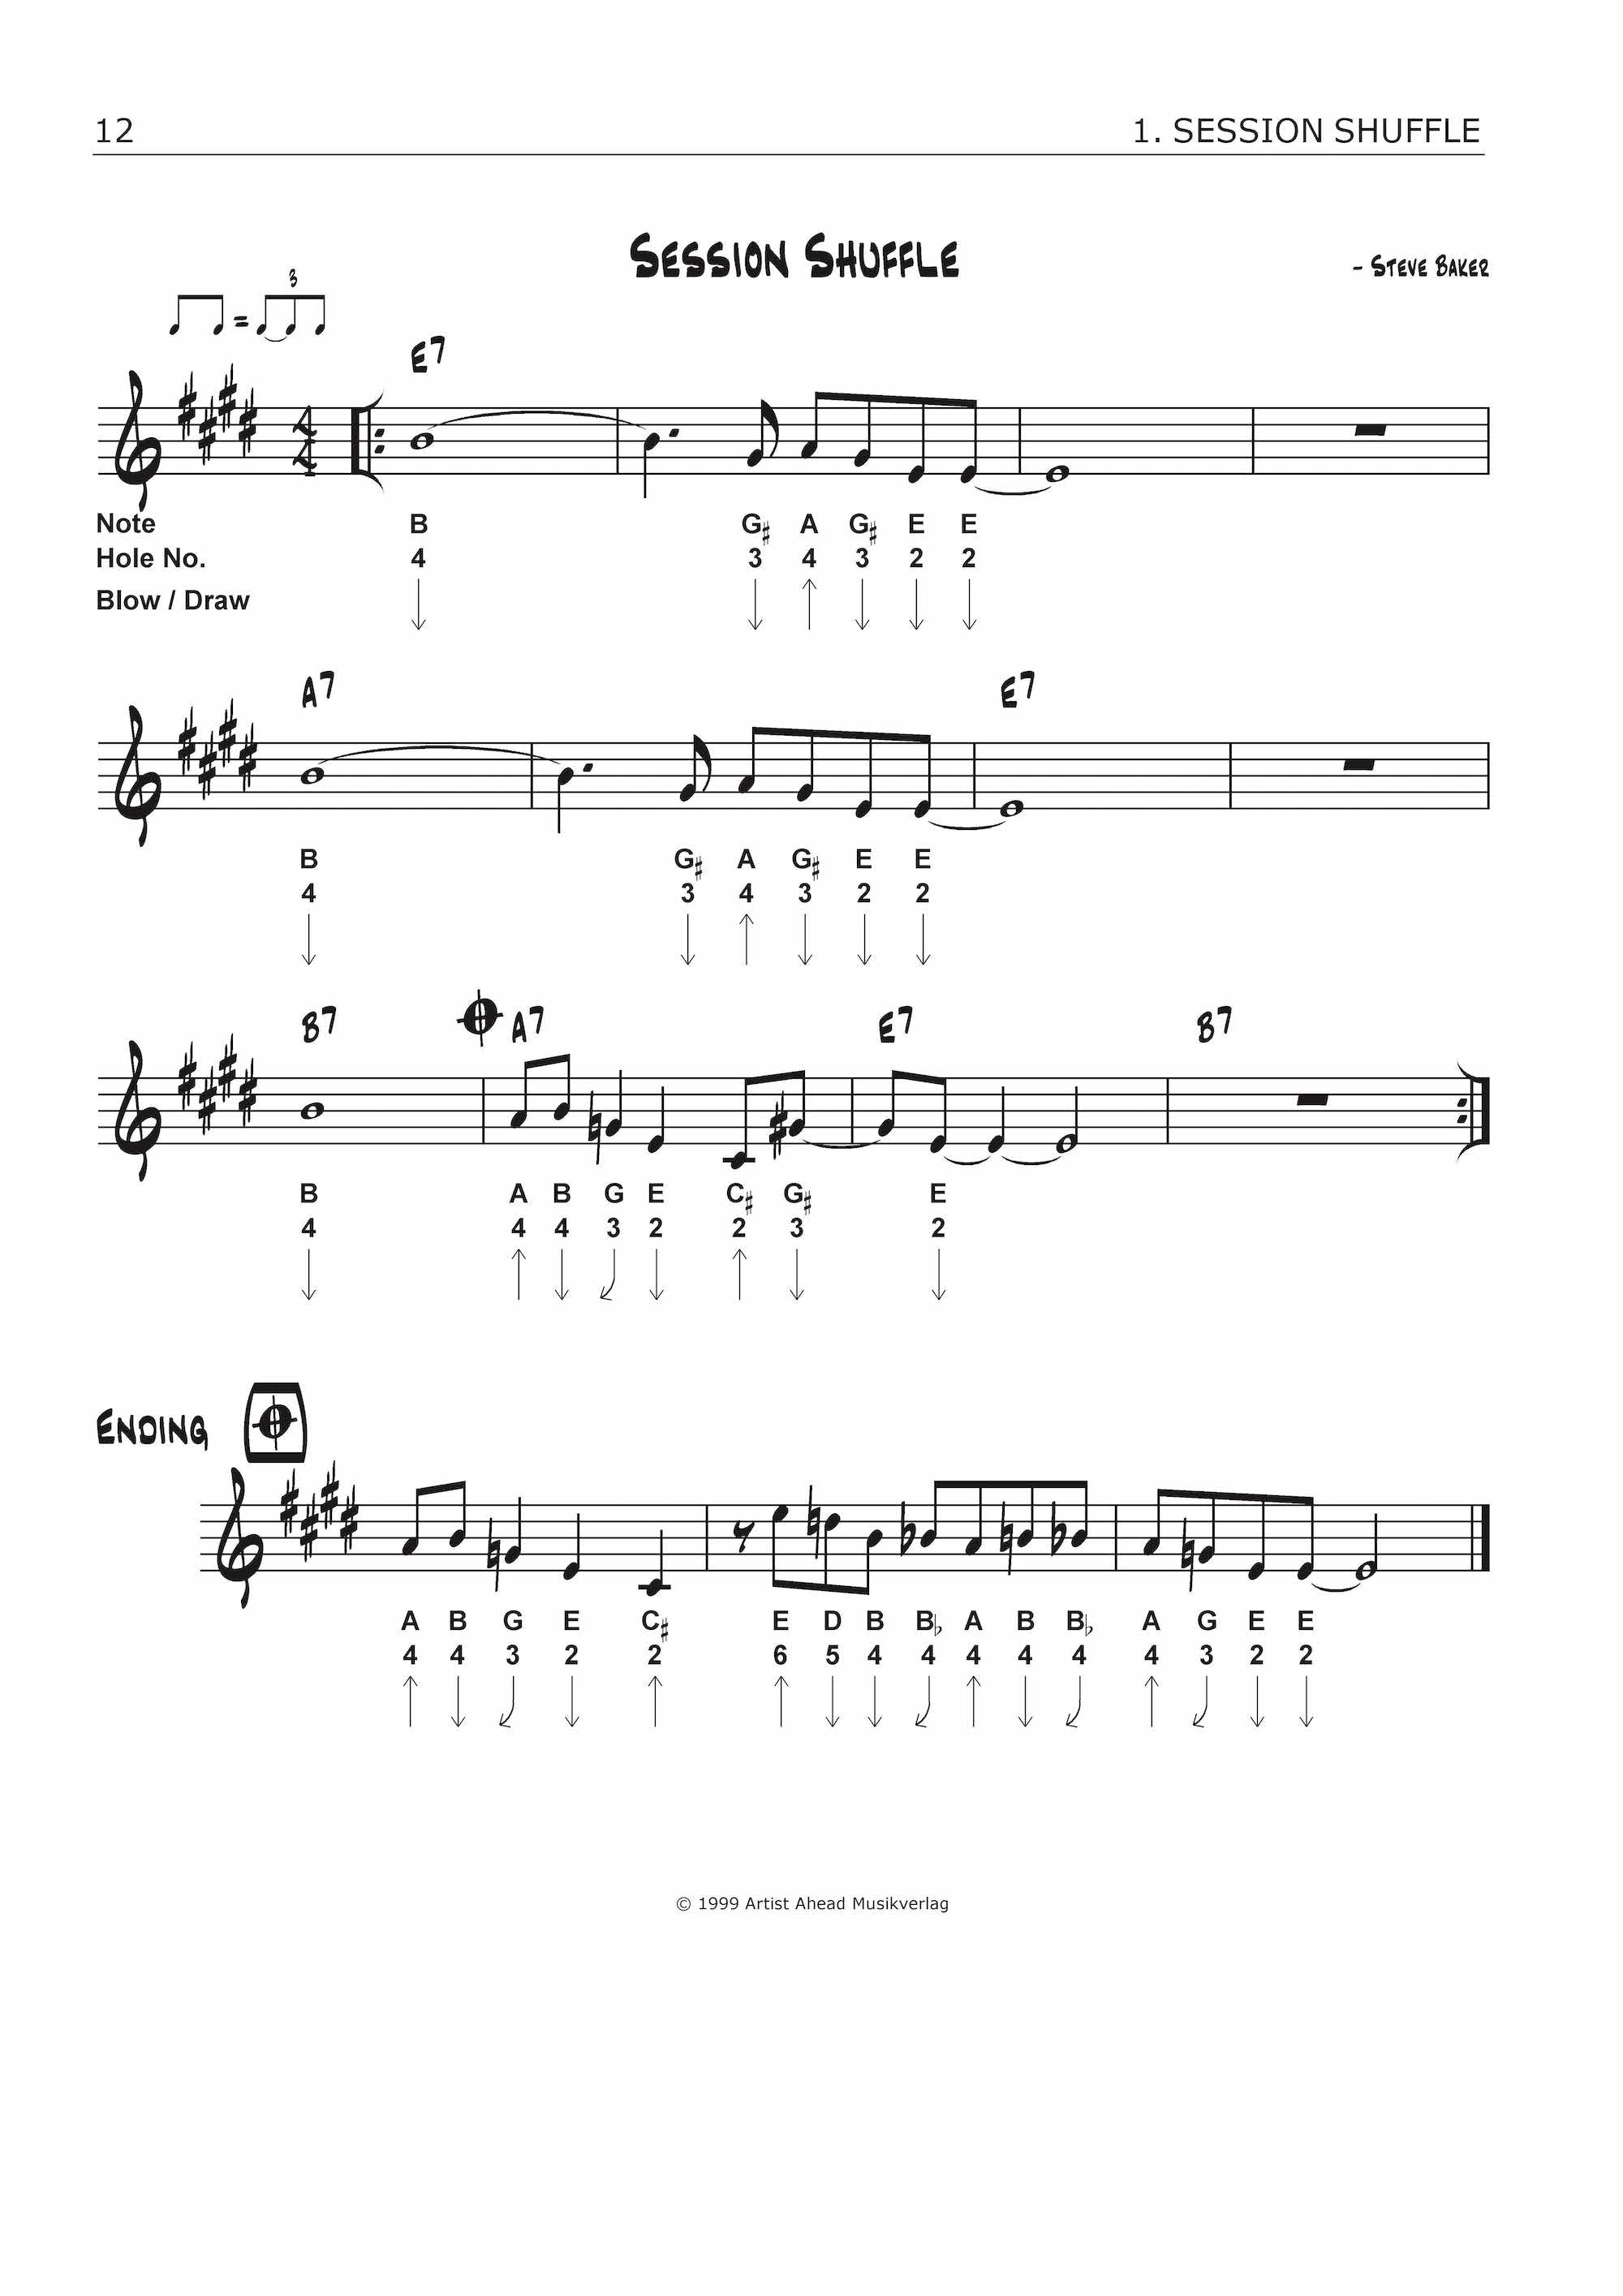 Steve Baker - Blues Harmonica Playalongs Vol. 1 (Buch-PDF und MP3s) (6688922435737)